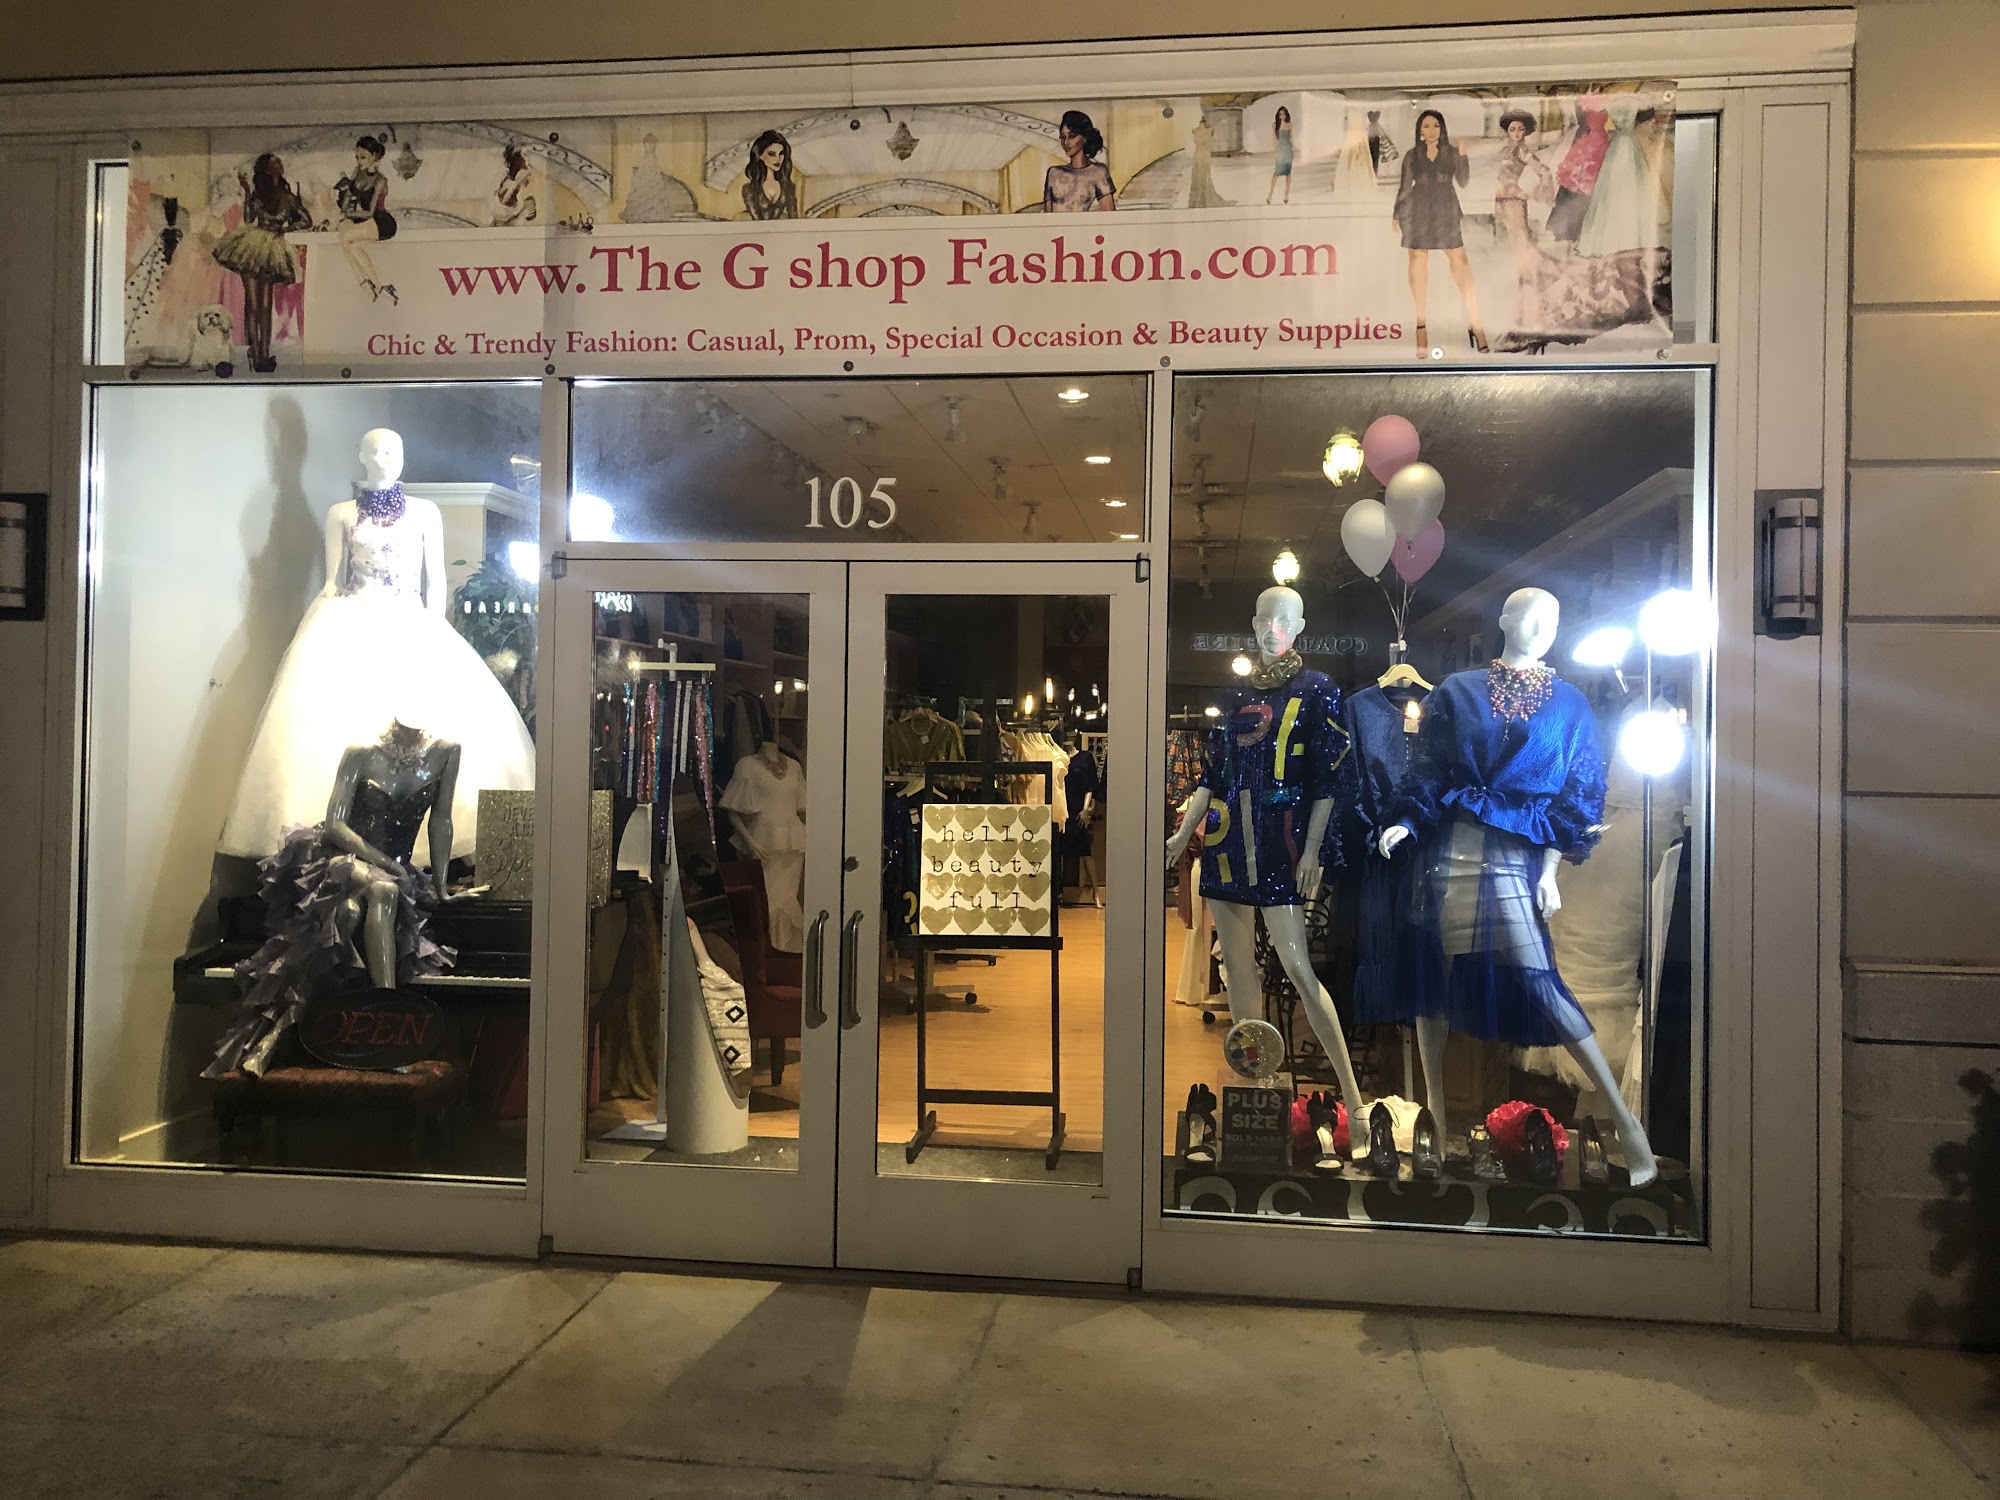 The G Shop Fashion